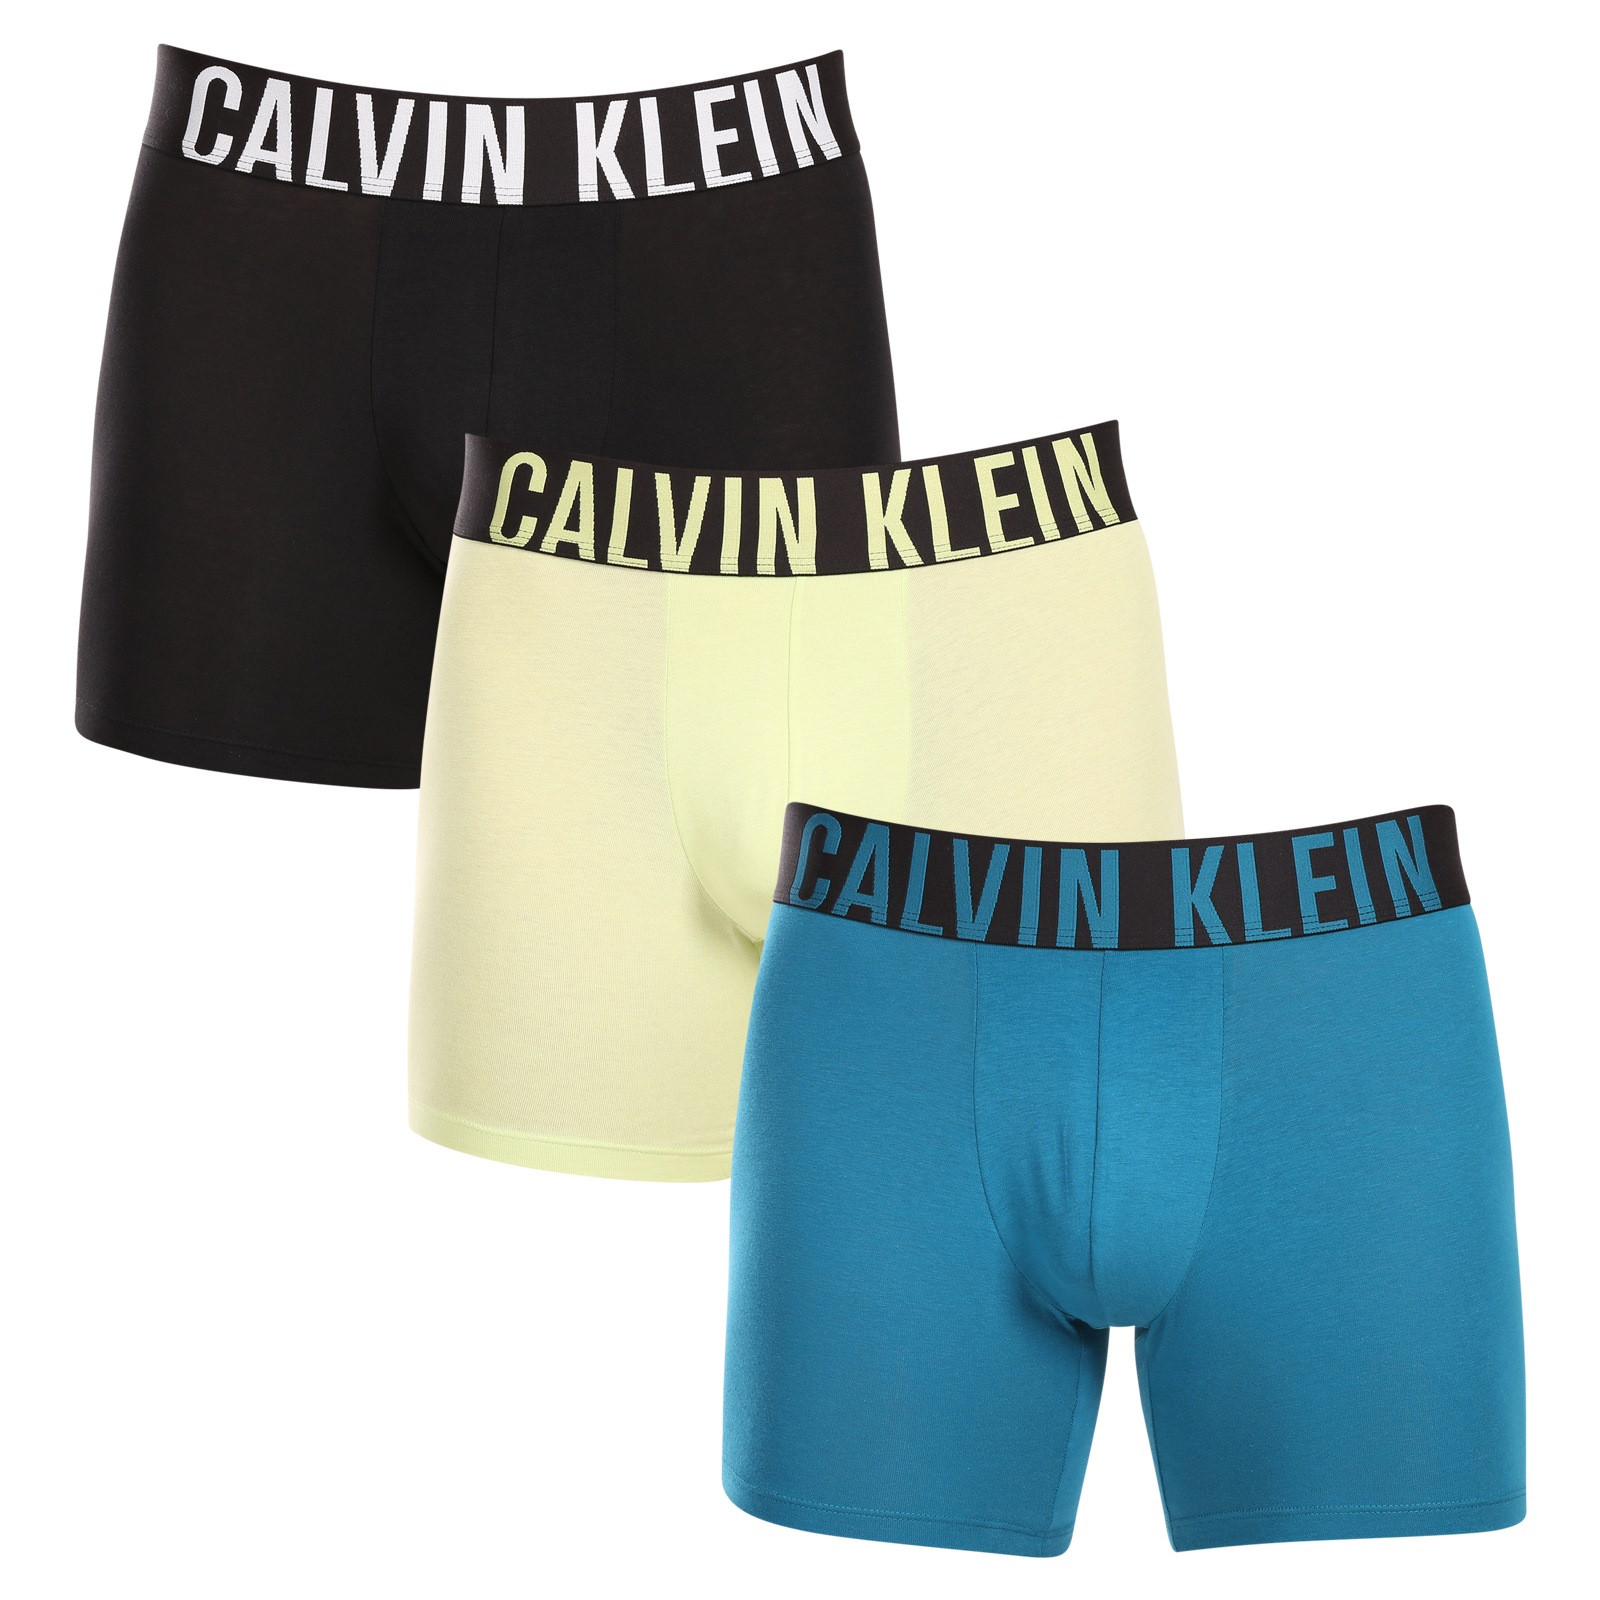 Sada tří pánských boxerek Calvin Klein